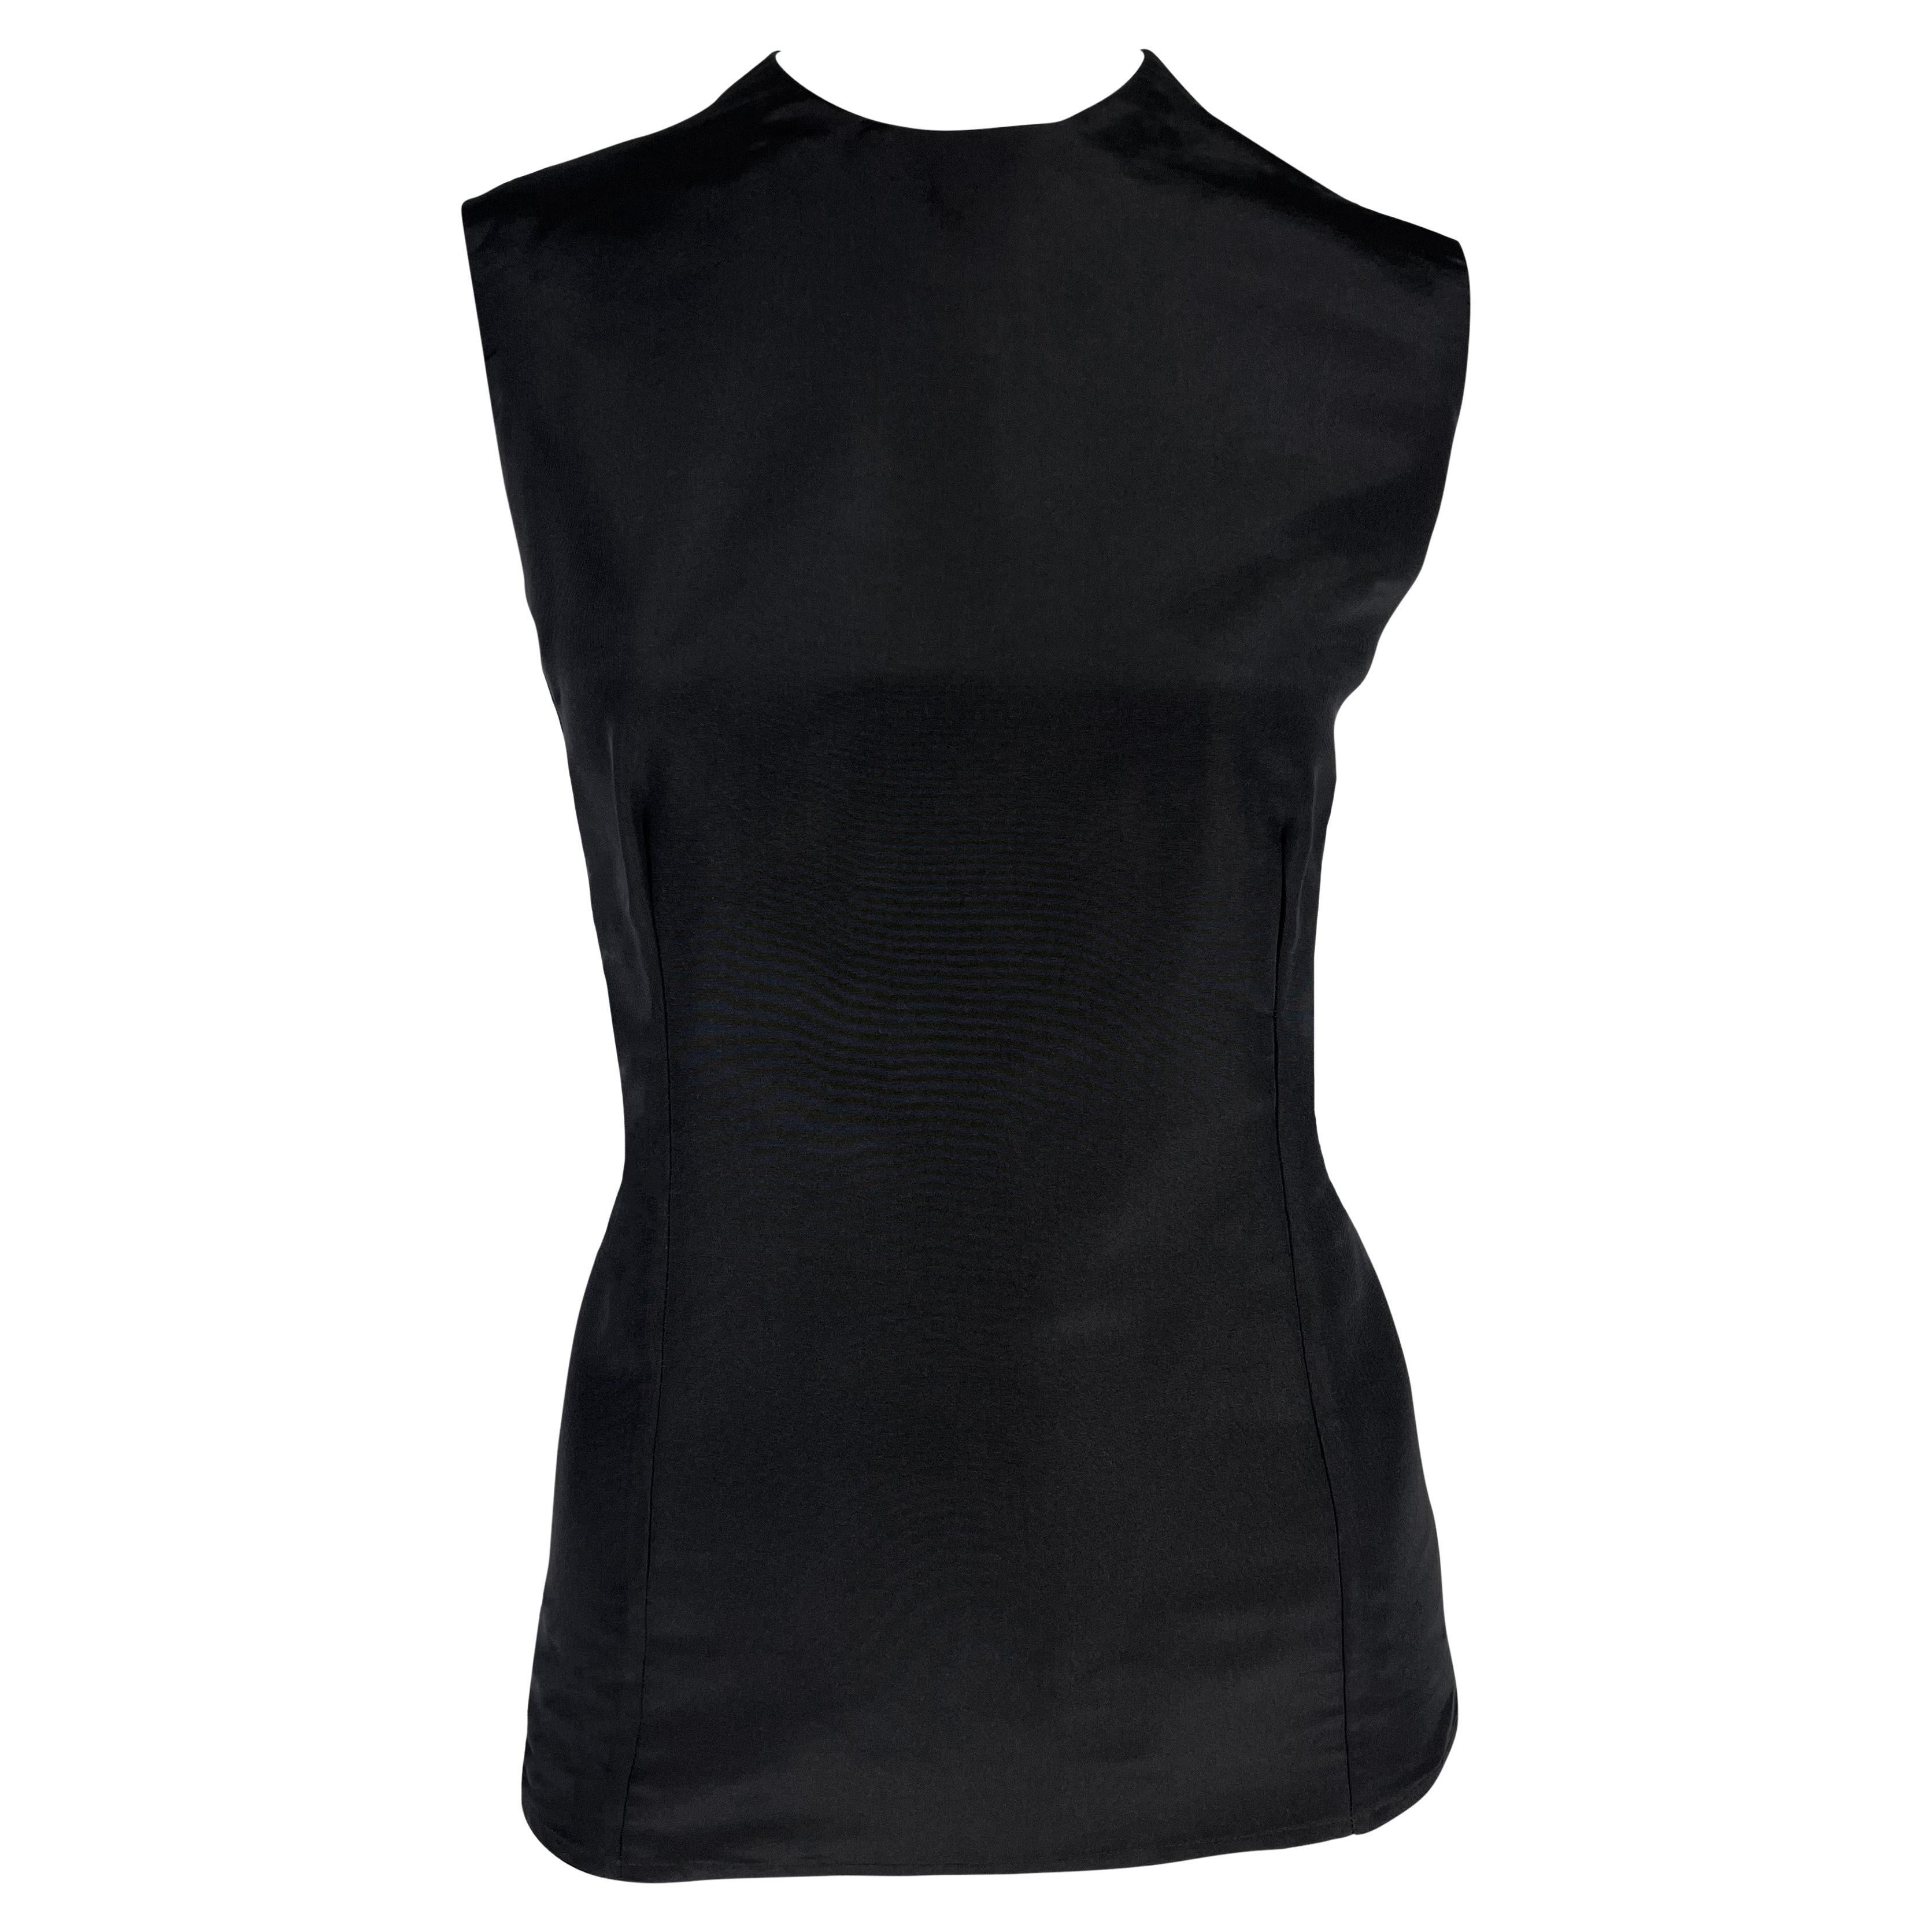 S/S 1990 Gianni Versace Black Silk Taffeta Tailored Fit Sleeveless Top For Sale